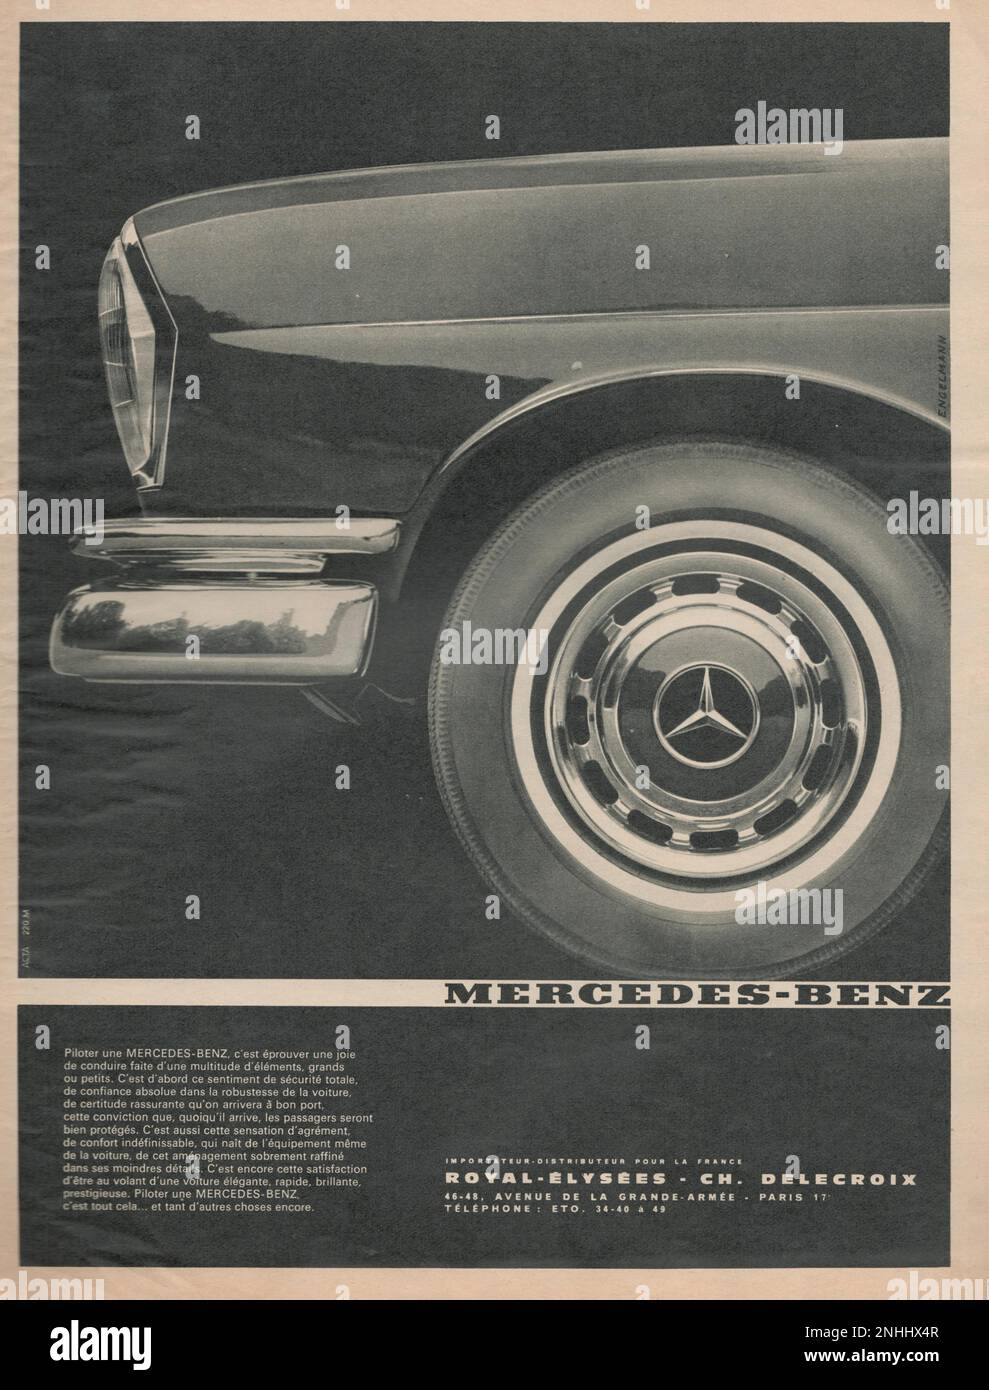 Mercedes Benz vintage French magazine advertisement Paris Match advert Mercedes advert 1965 Stock Photo